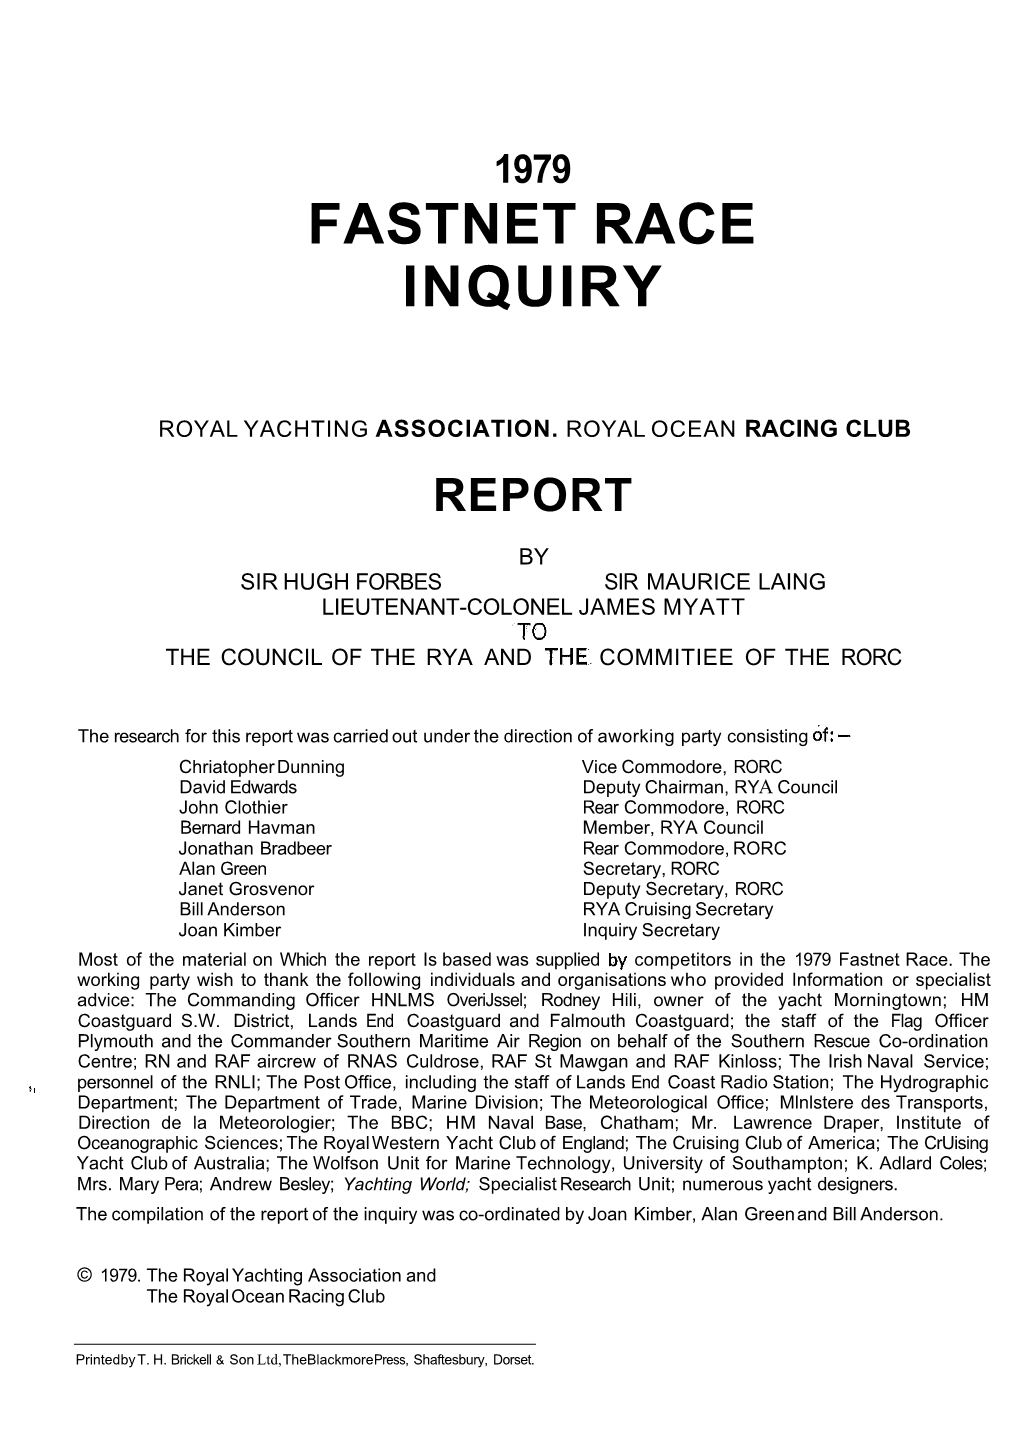 1979 Fastnet Race Inquiry